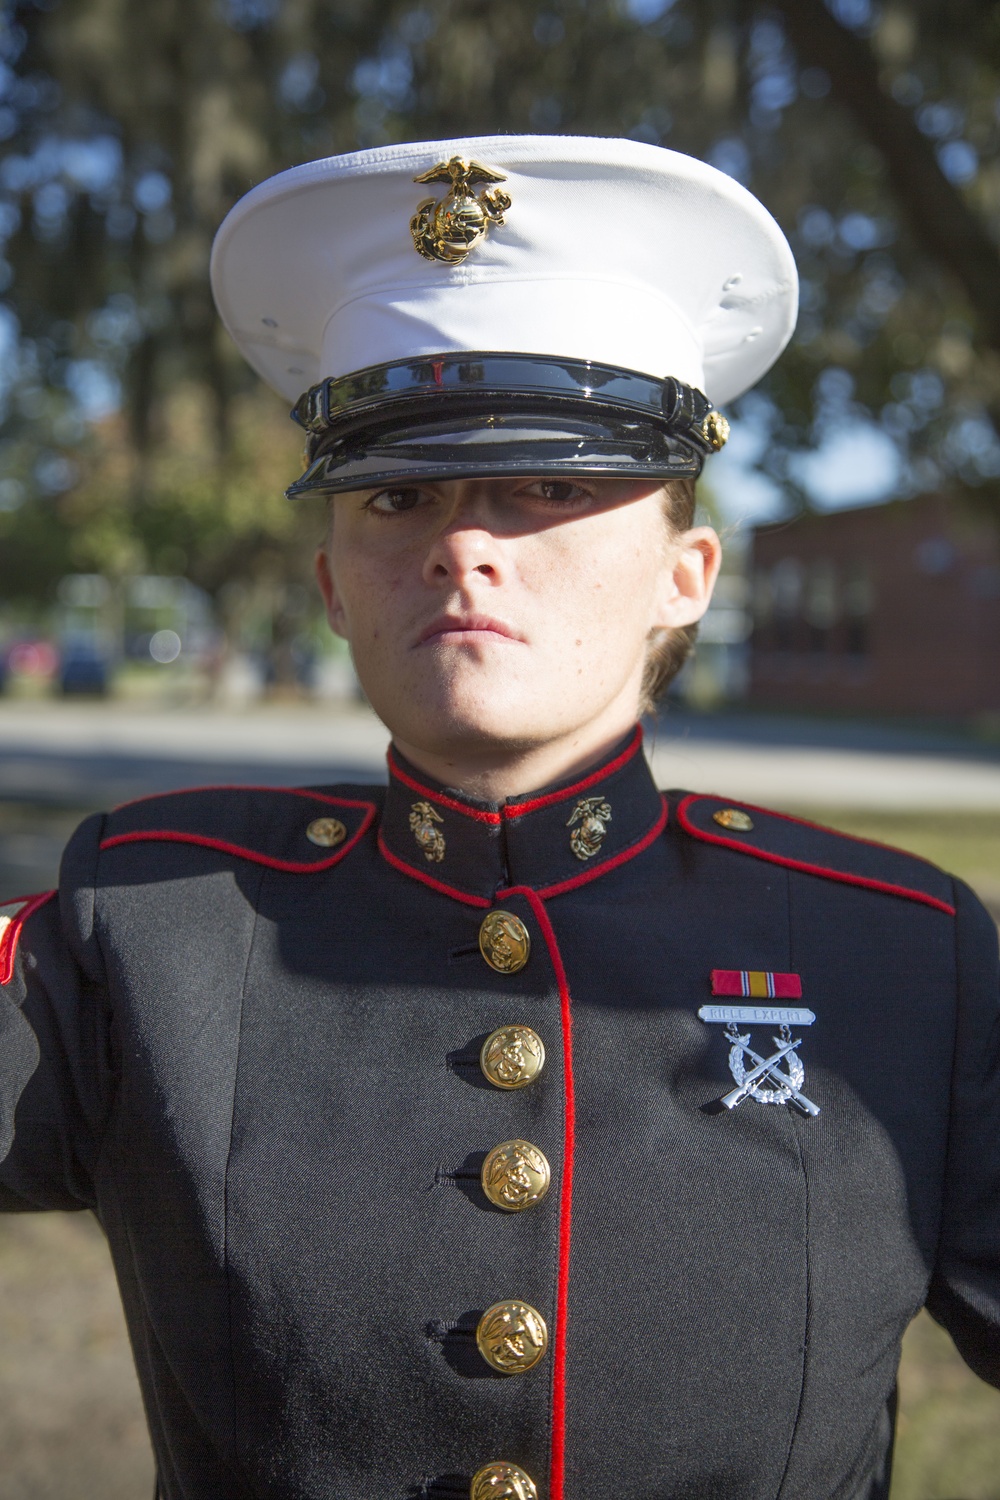 Female Marine Officer Uniforms